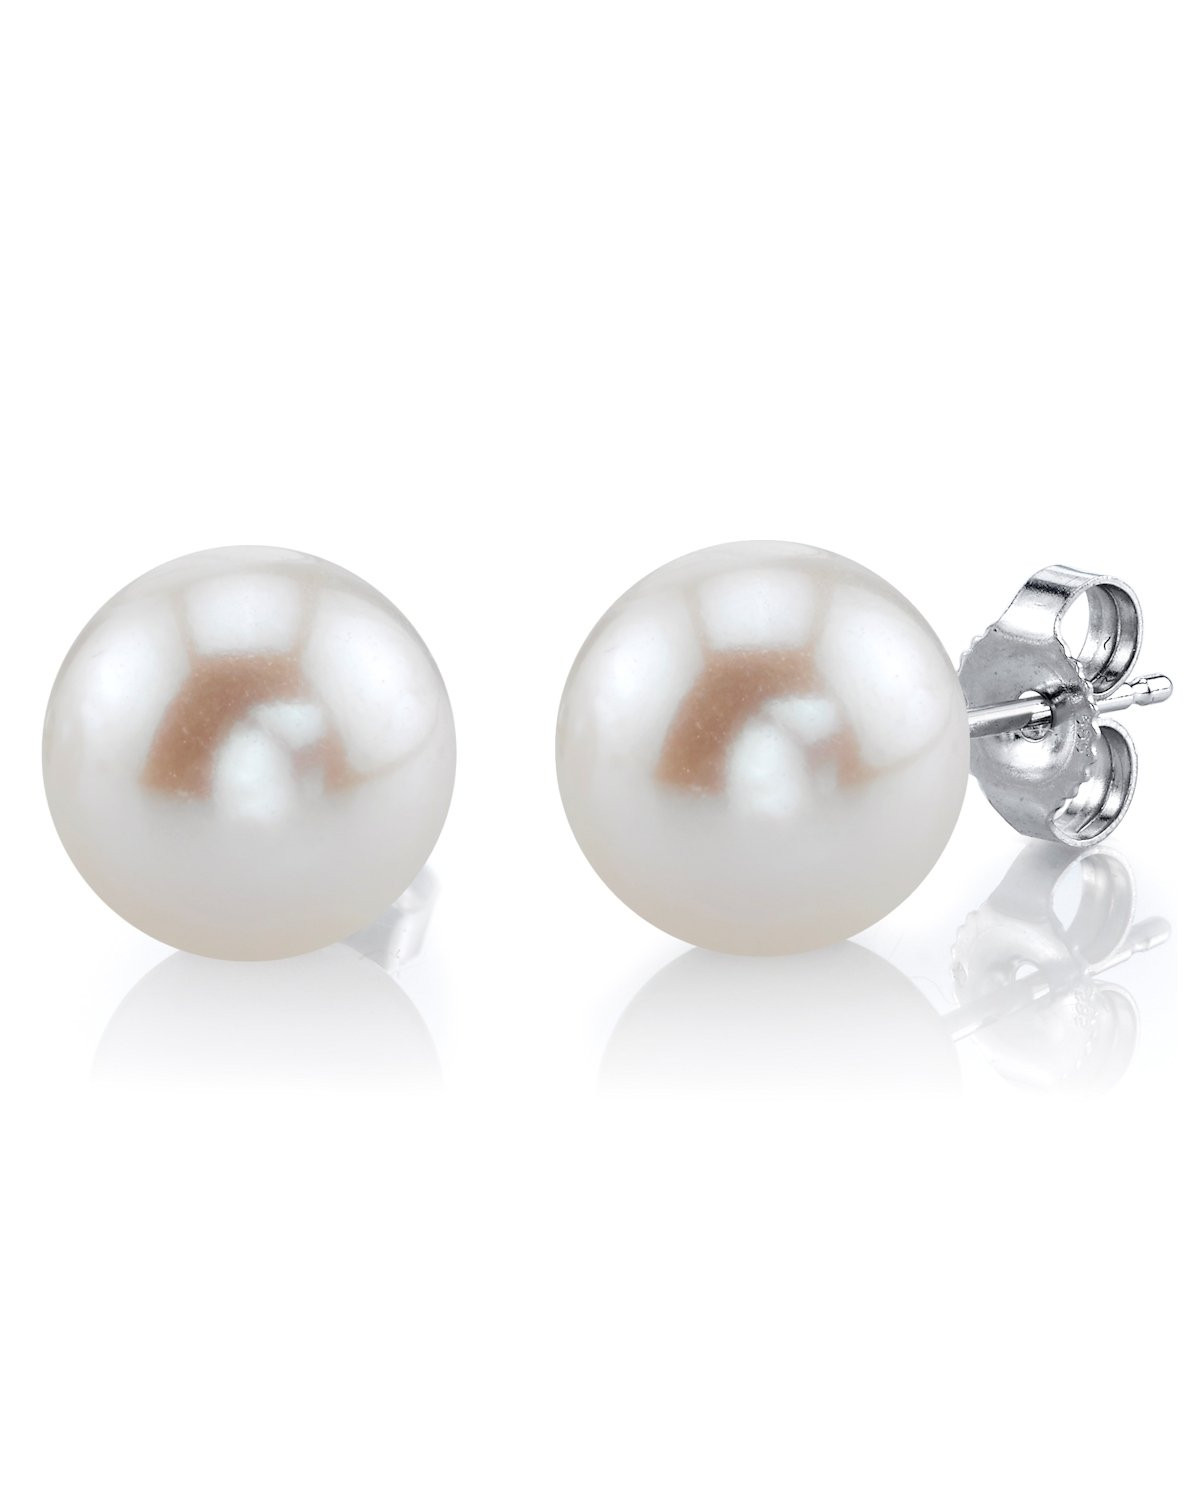 Pearl Earring Studs
 12mm White Freshwater Pearl Stud Earrings